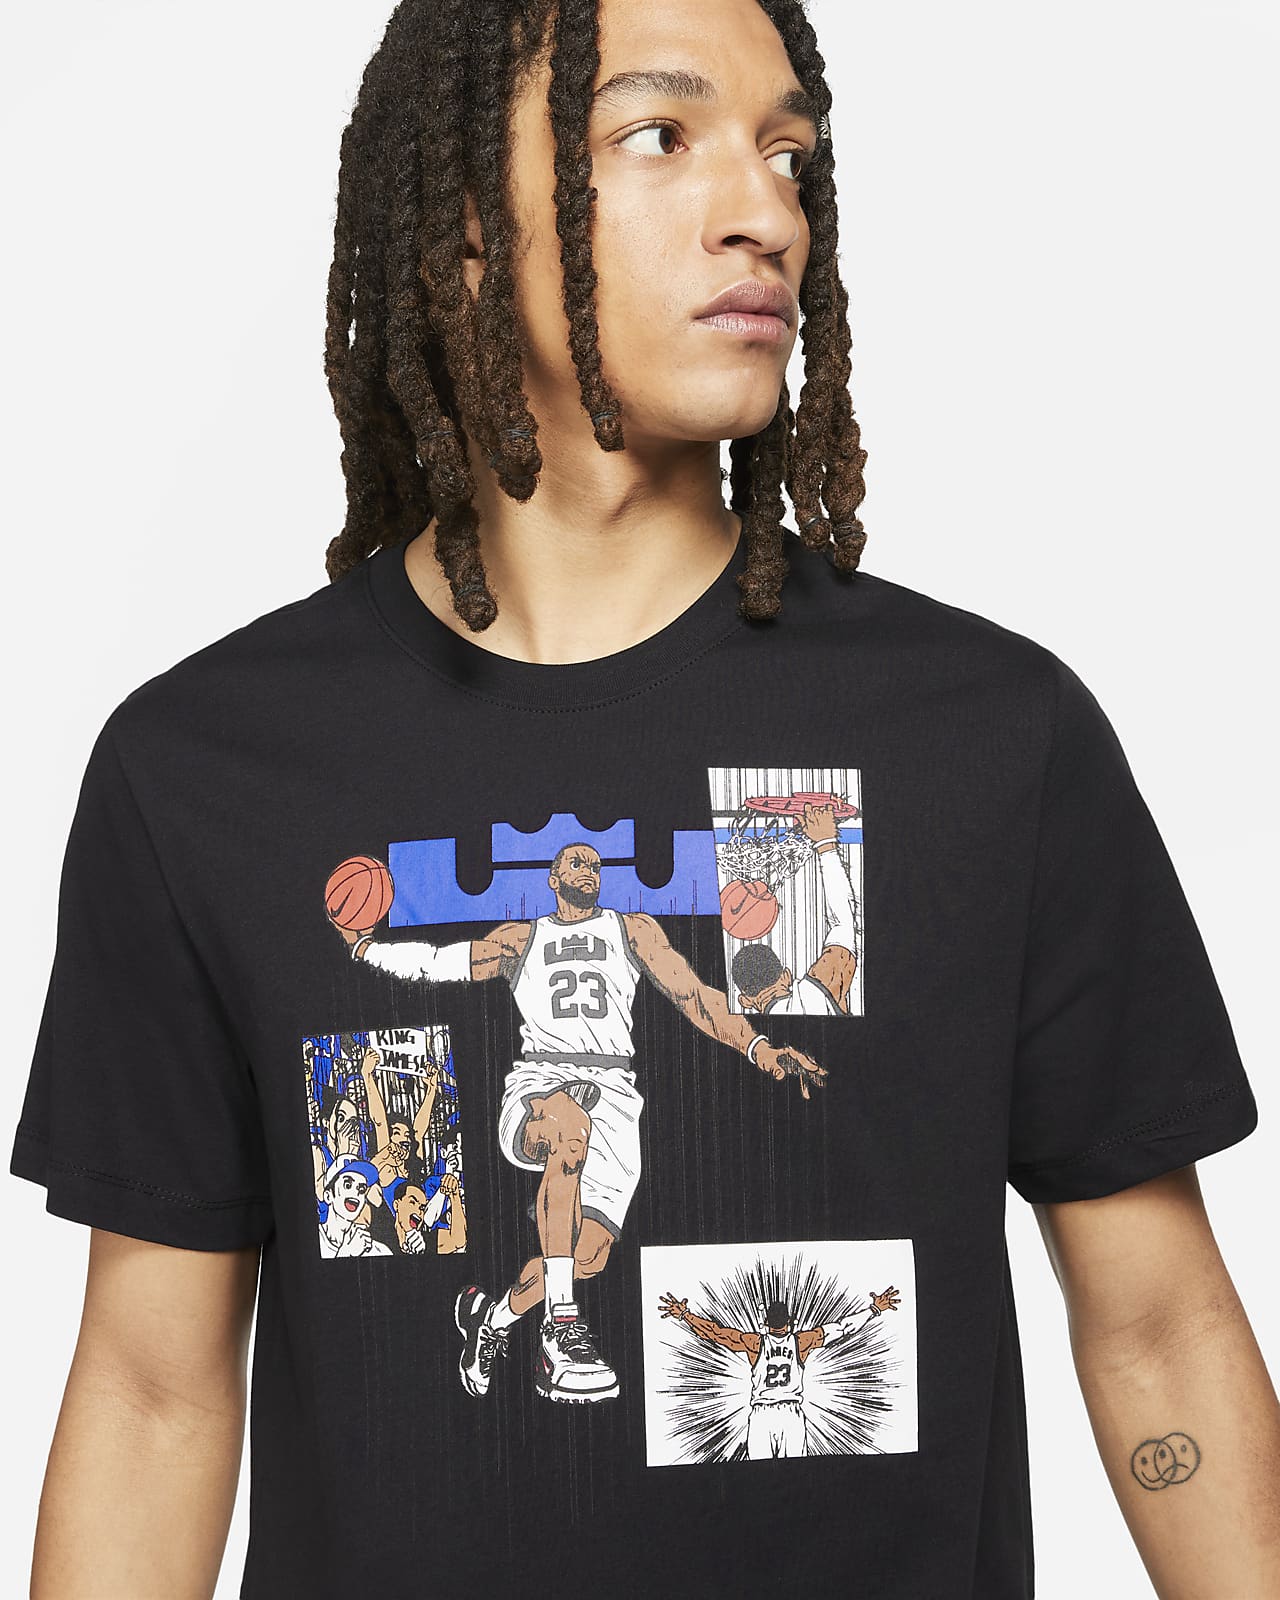  LeBron  Logo  Men s Basketball T Shirt Nike com